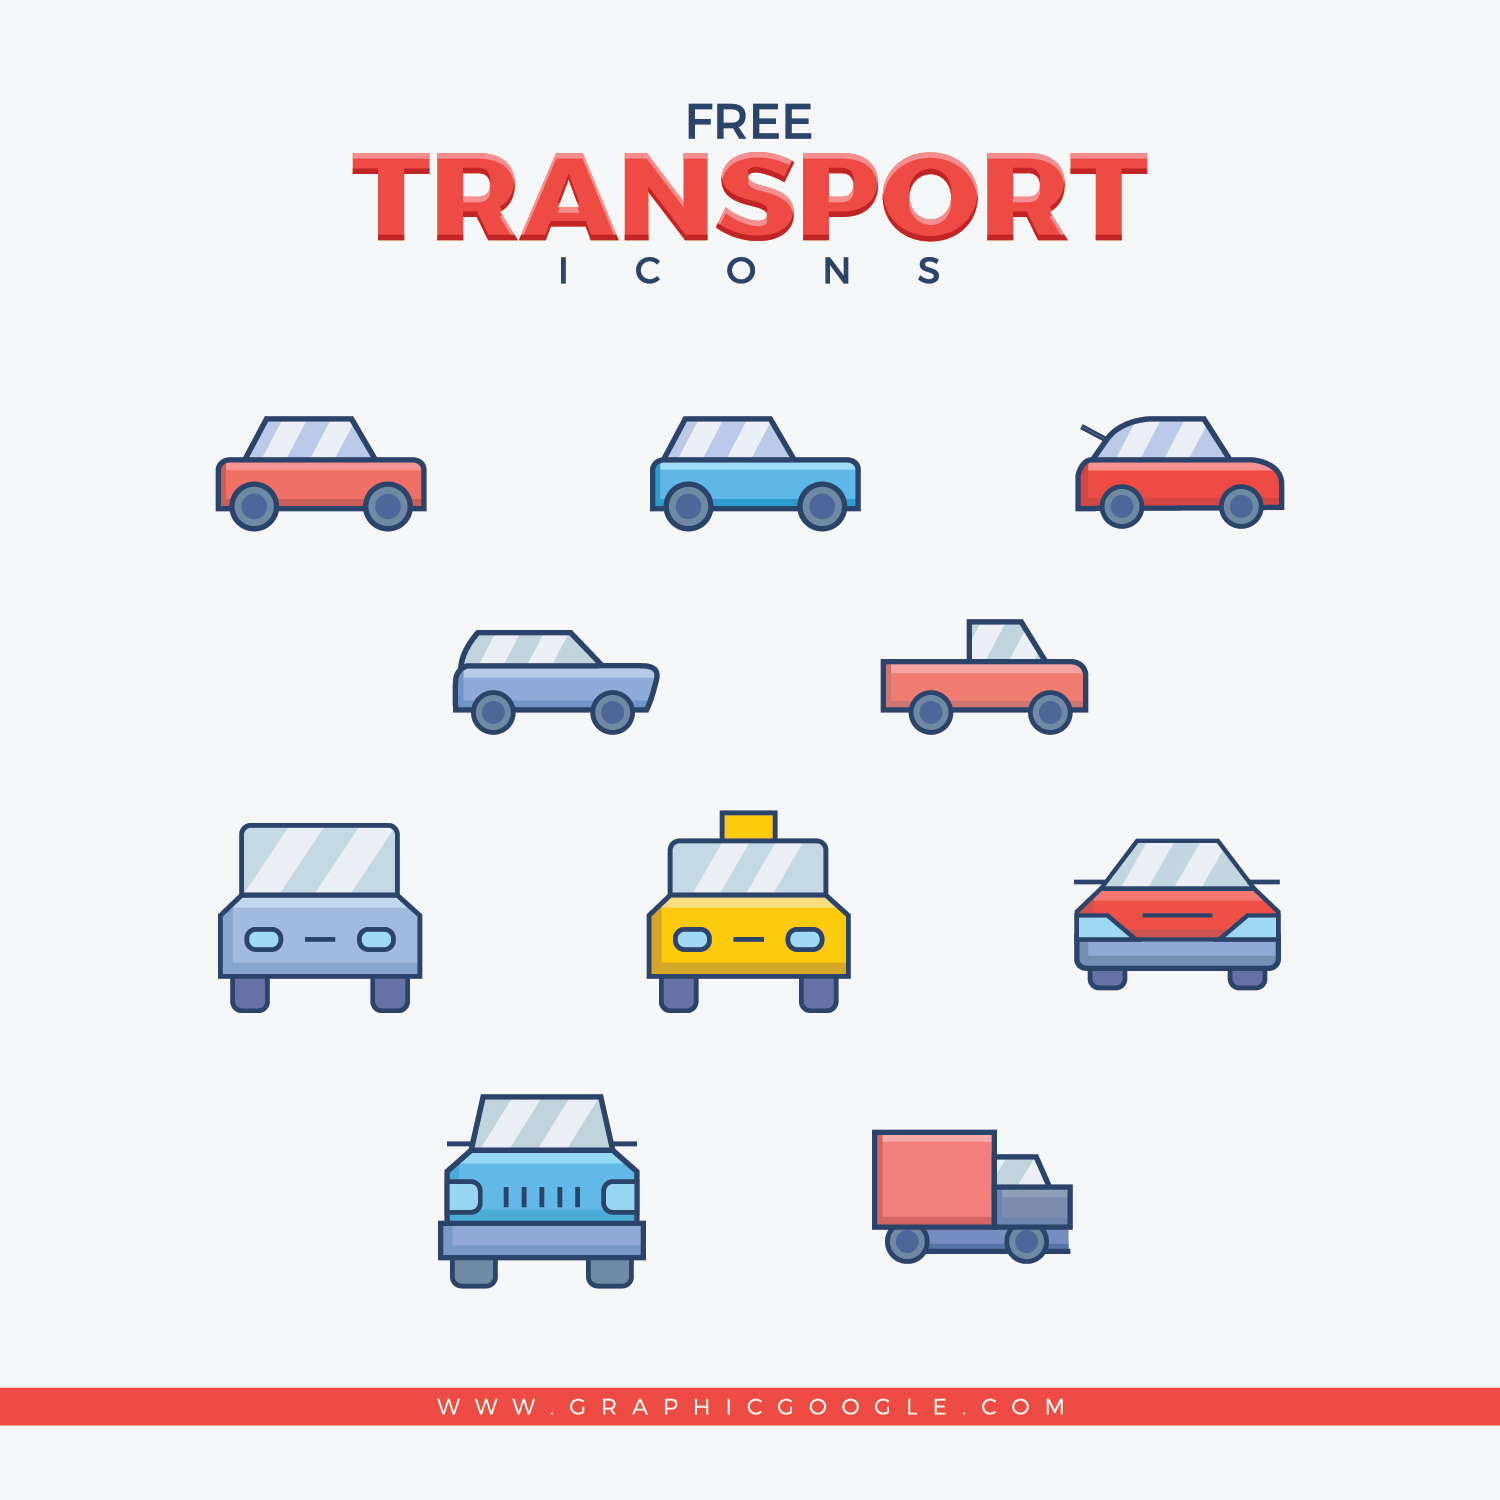 Free Transport Icons